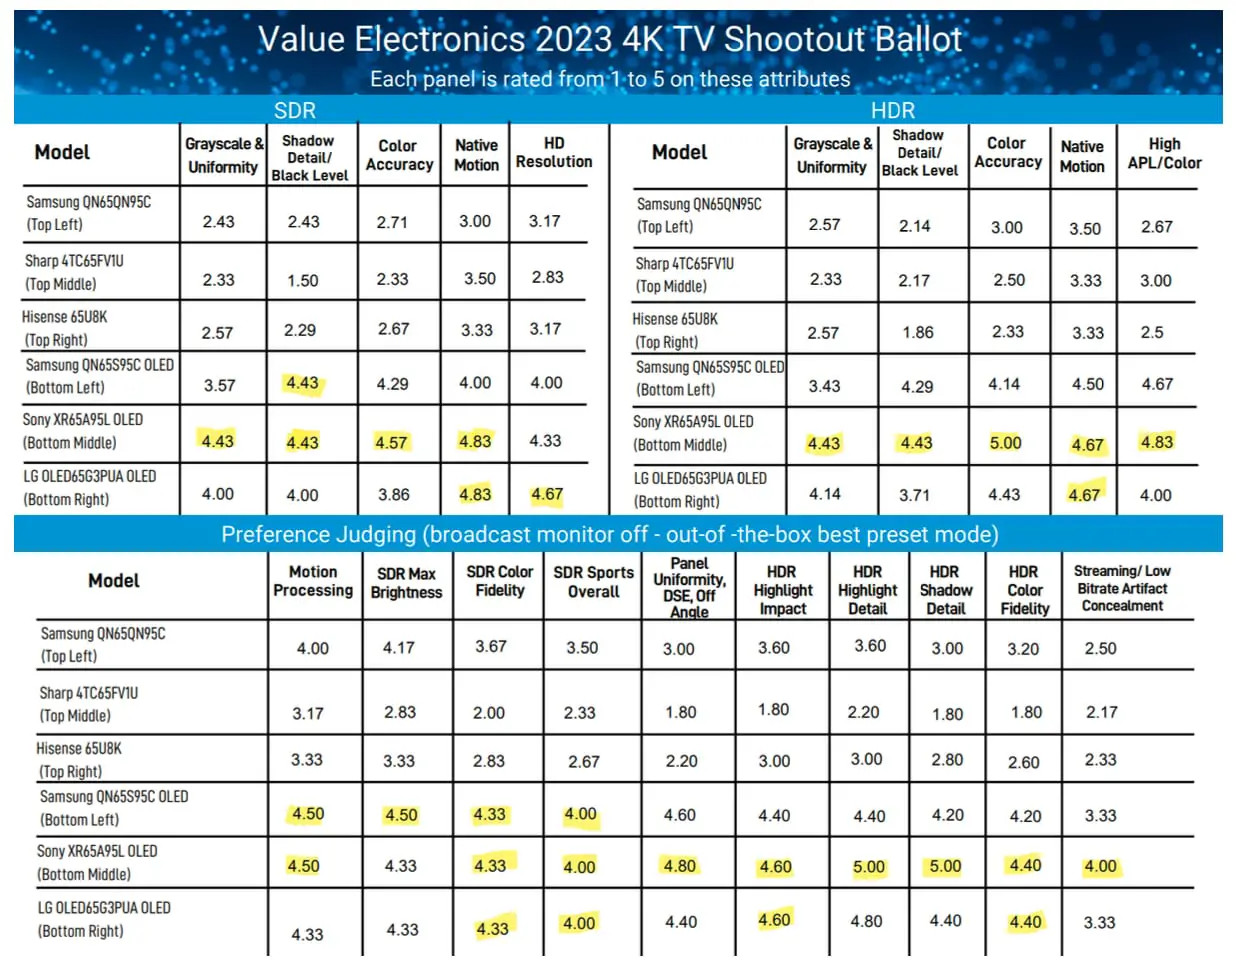 Die Scorecard vom Value Electronics TV Shootout